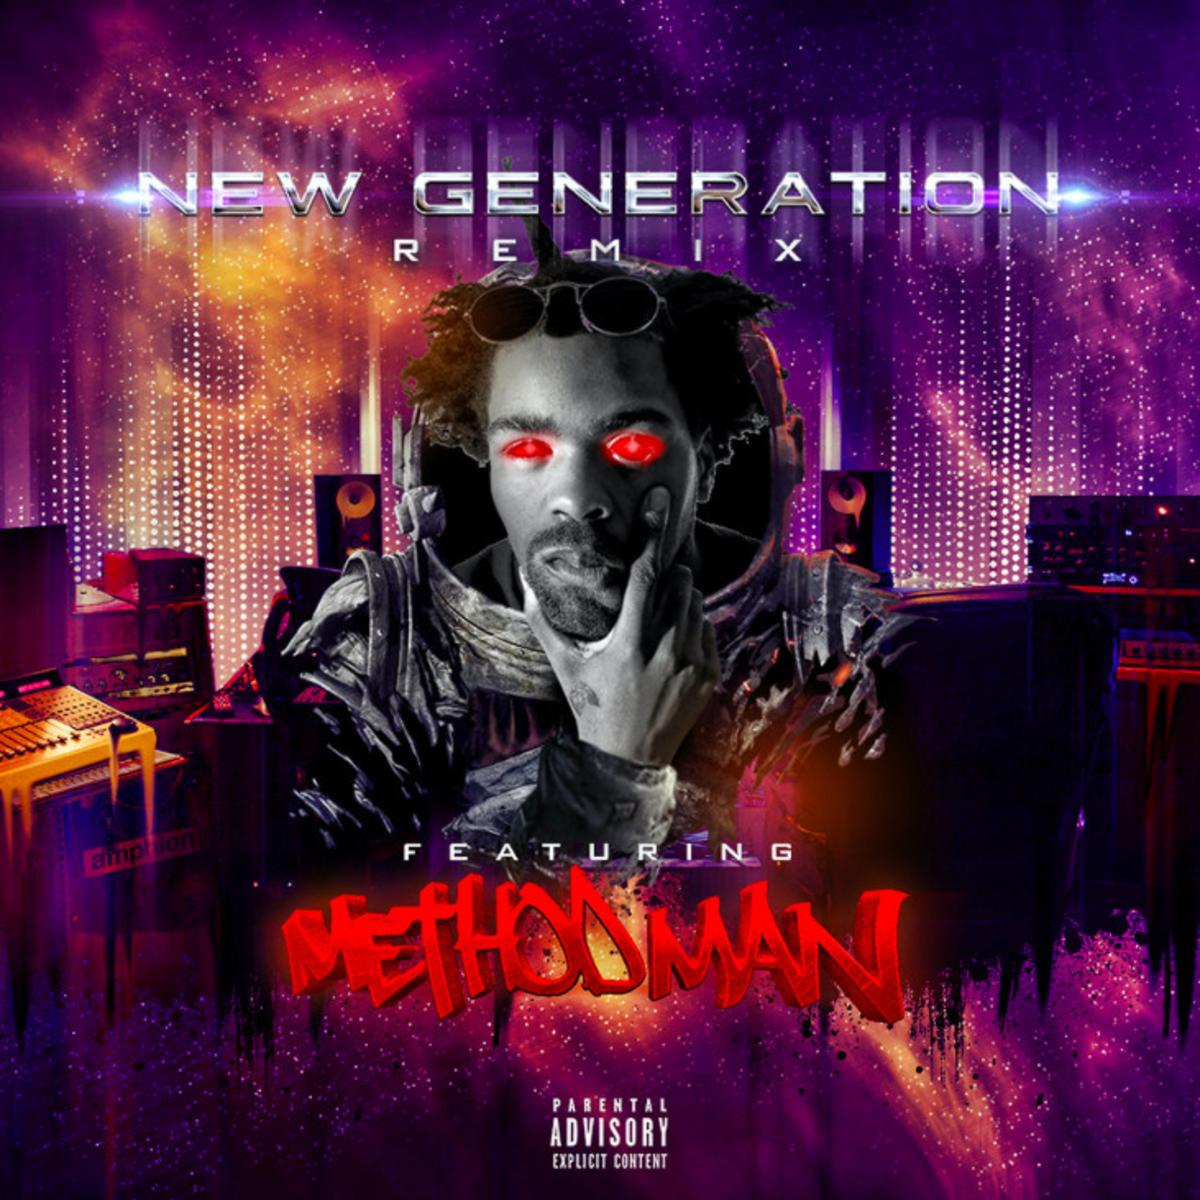 "New Generation Remix Ft. Method Man"